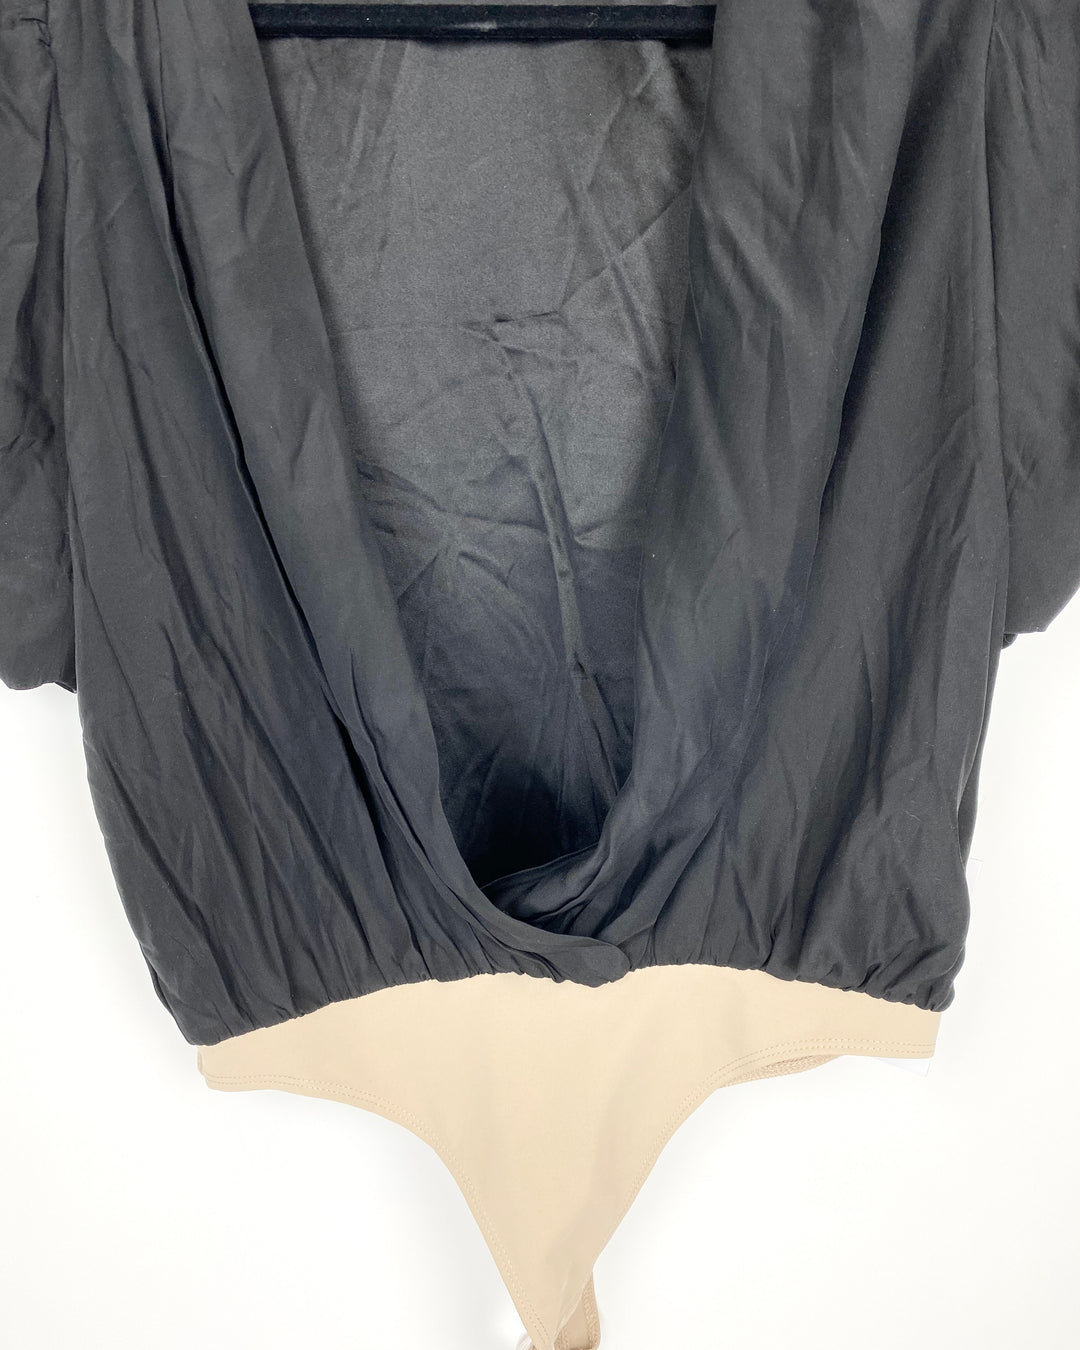 Black Silk Bodysuit - Small